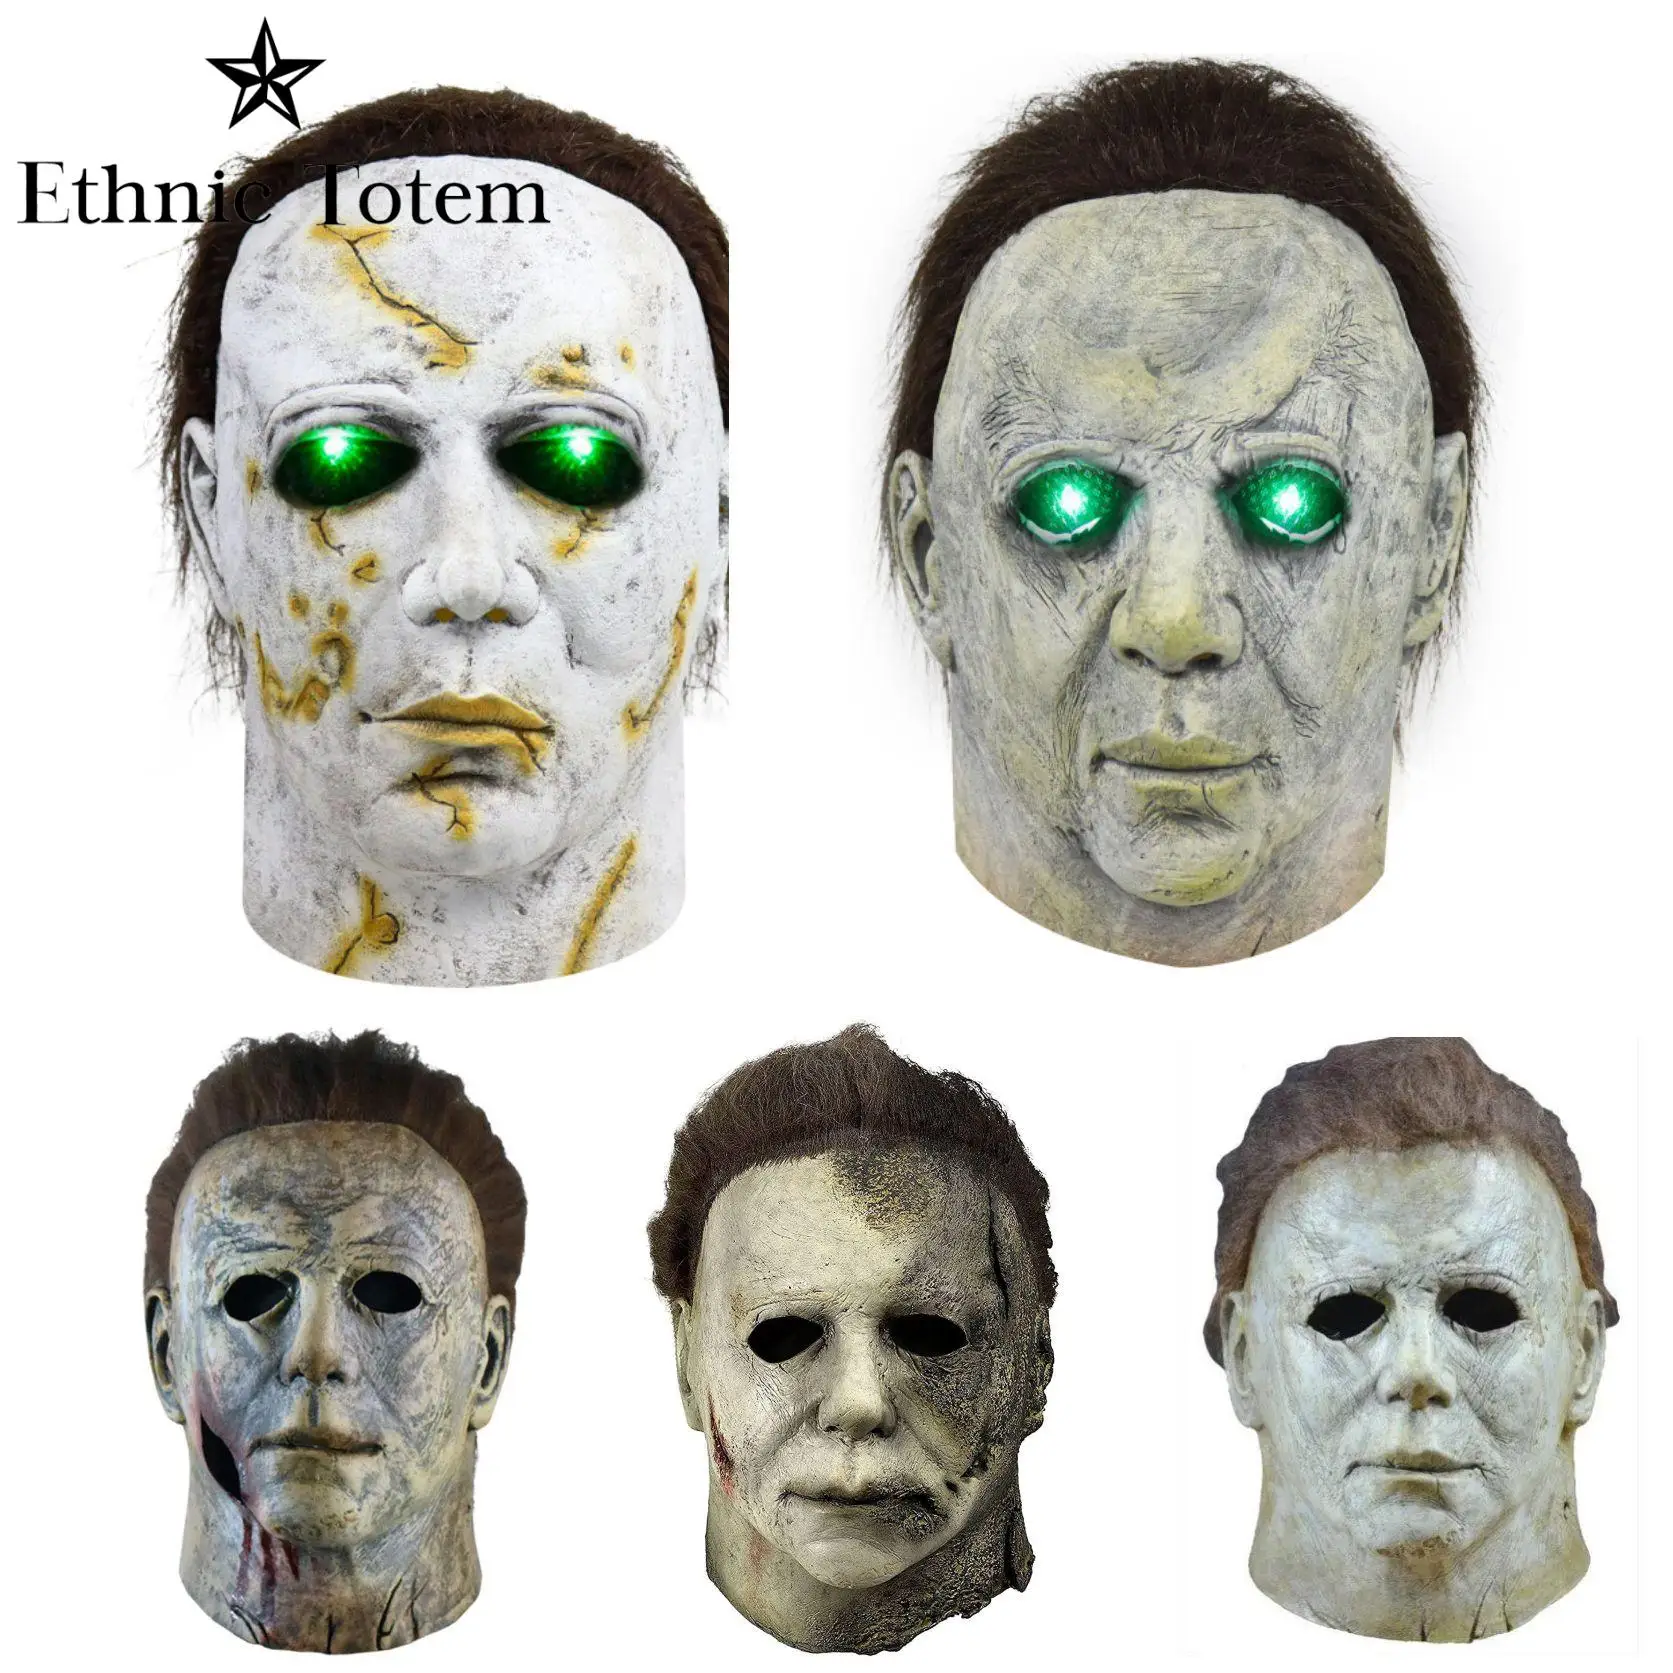 

Halloween Michael Myers Mask 1978 Movie Killer Horror Realistic Cosplay Latex Mask Adult Terror Luminous Grey Mask Carnival